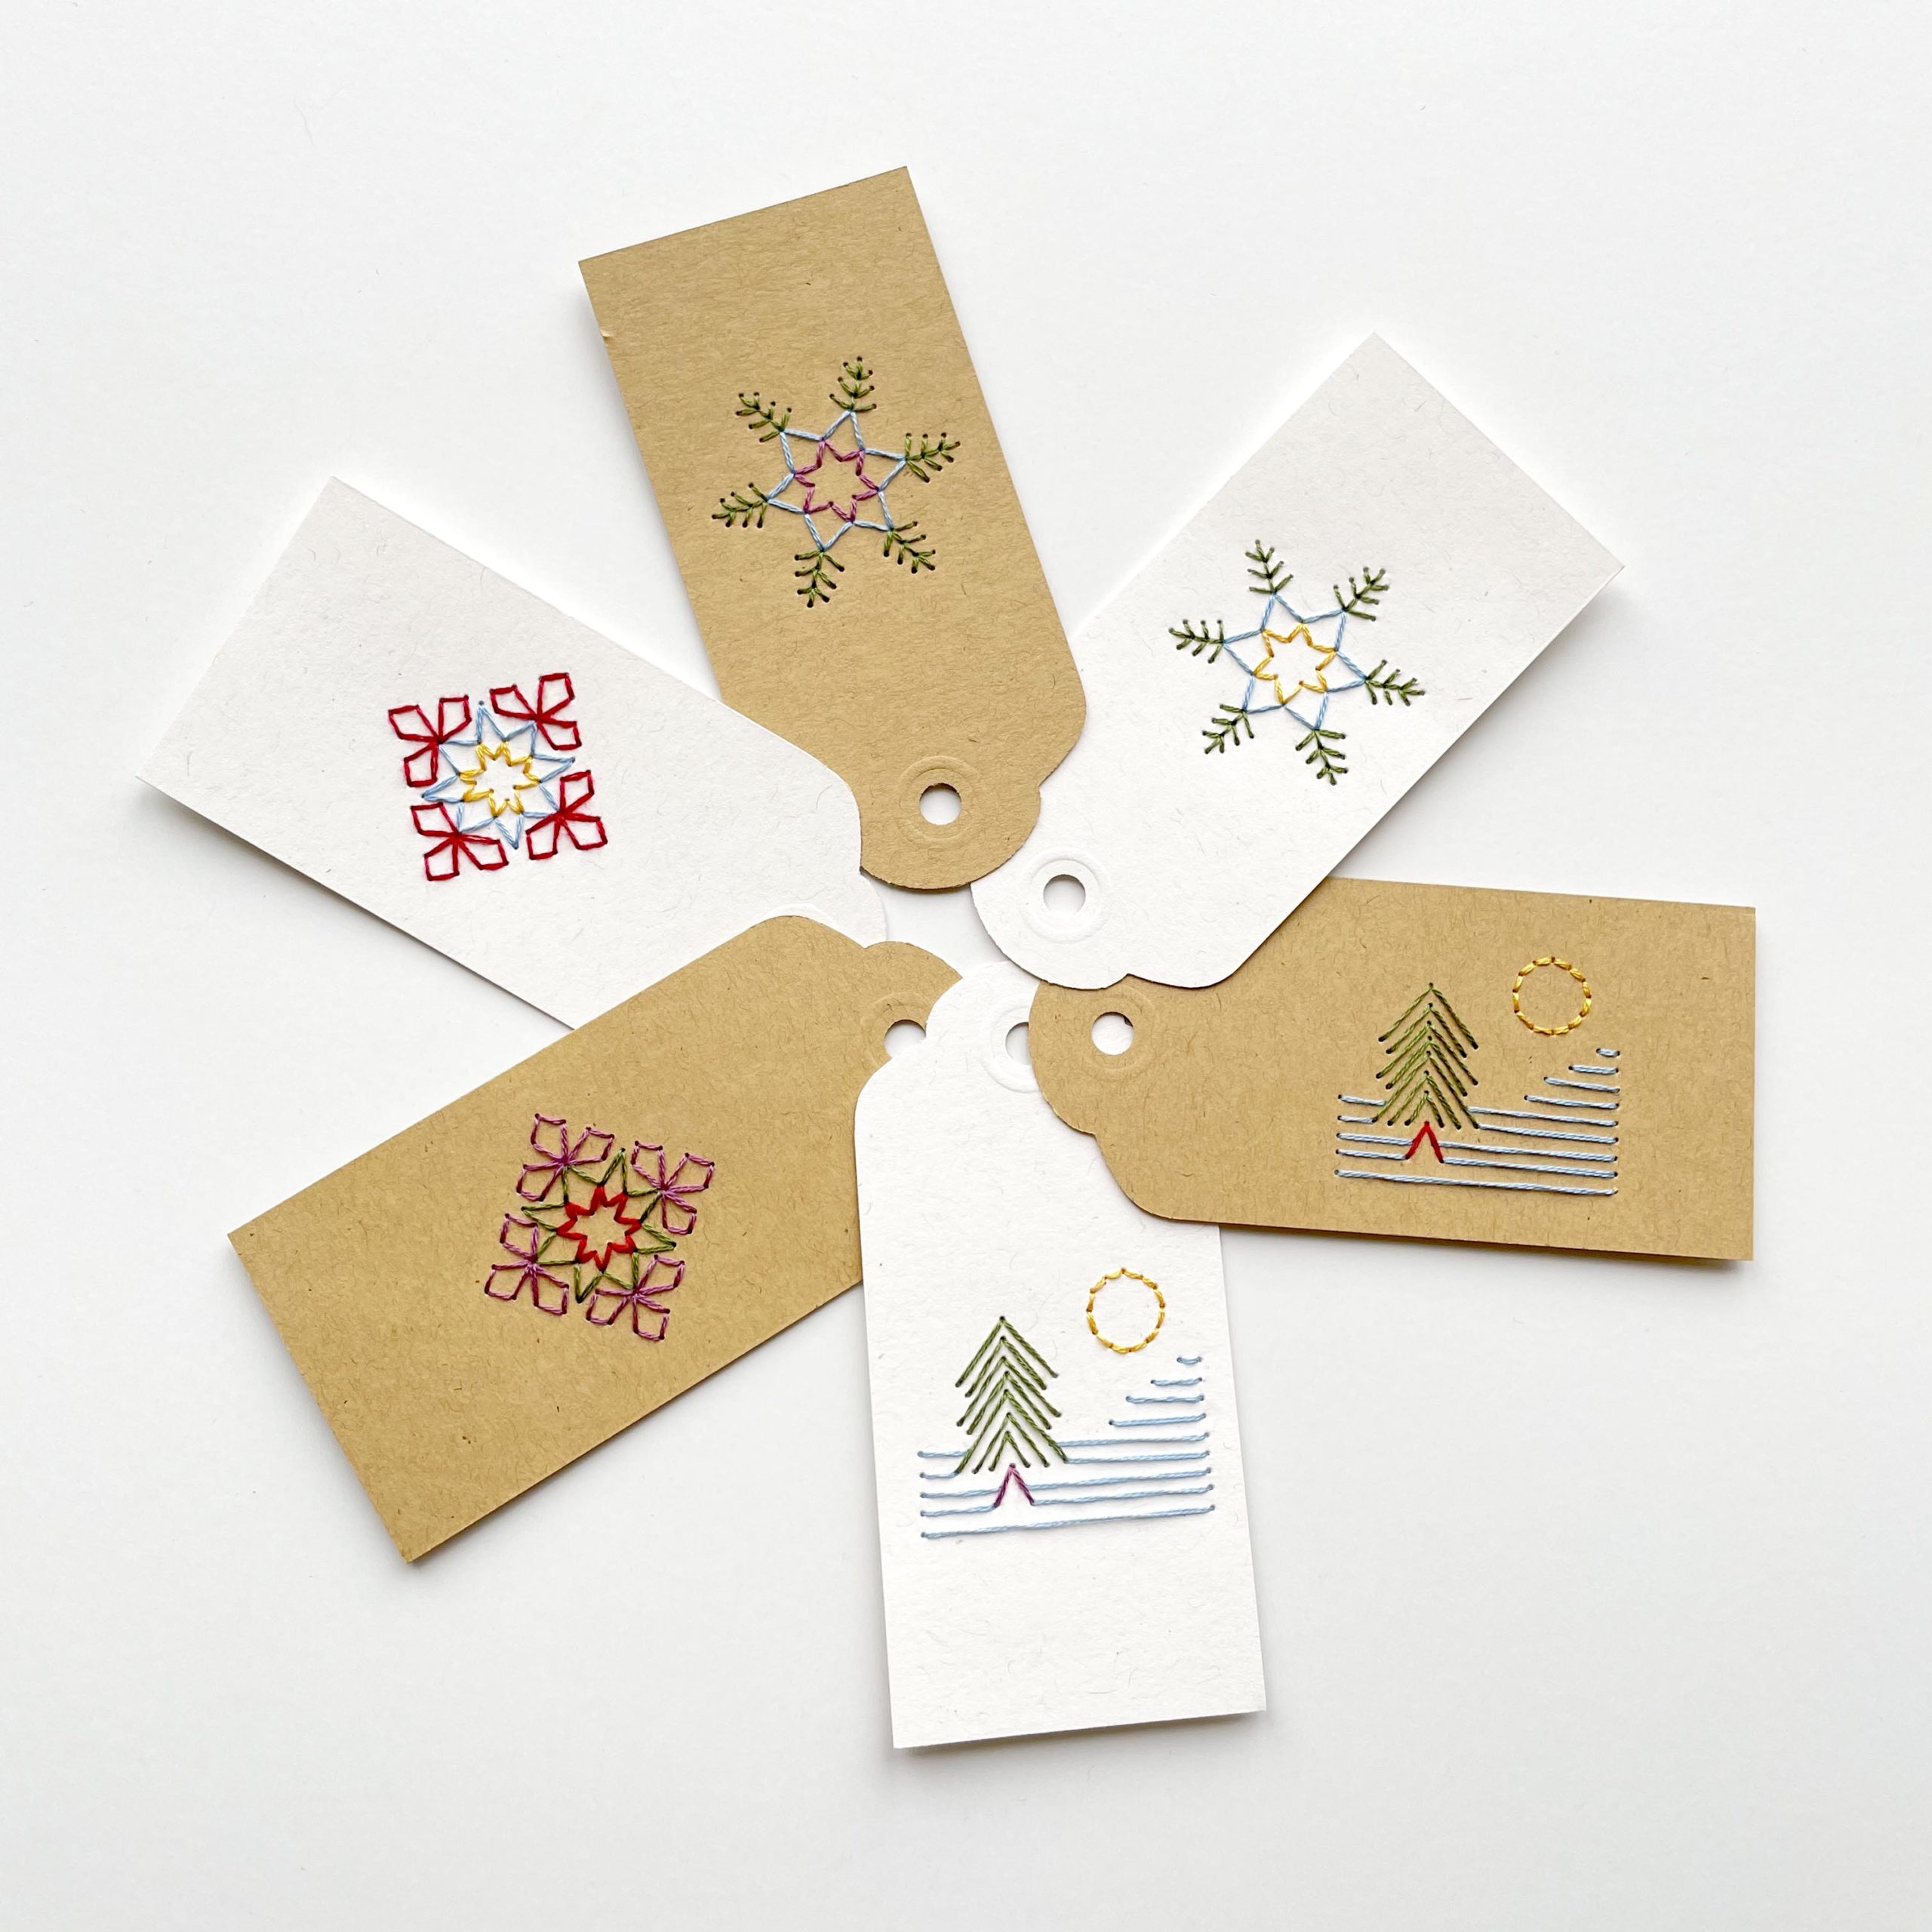 Winter Woodland mini paper embroidery patterns by Mayuka Fiber Art - Maydel